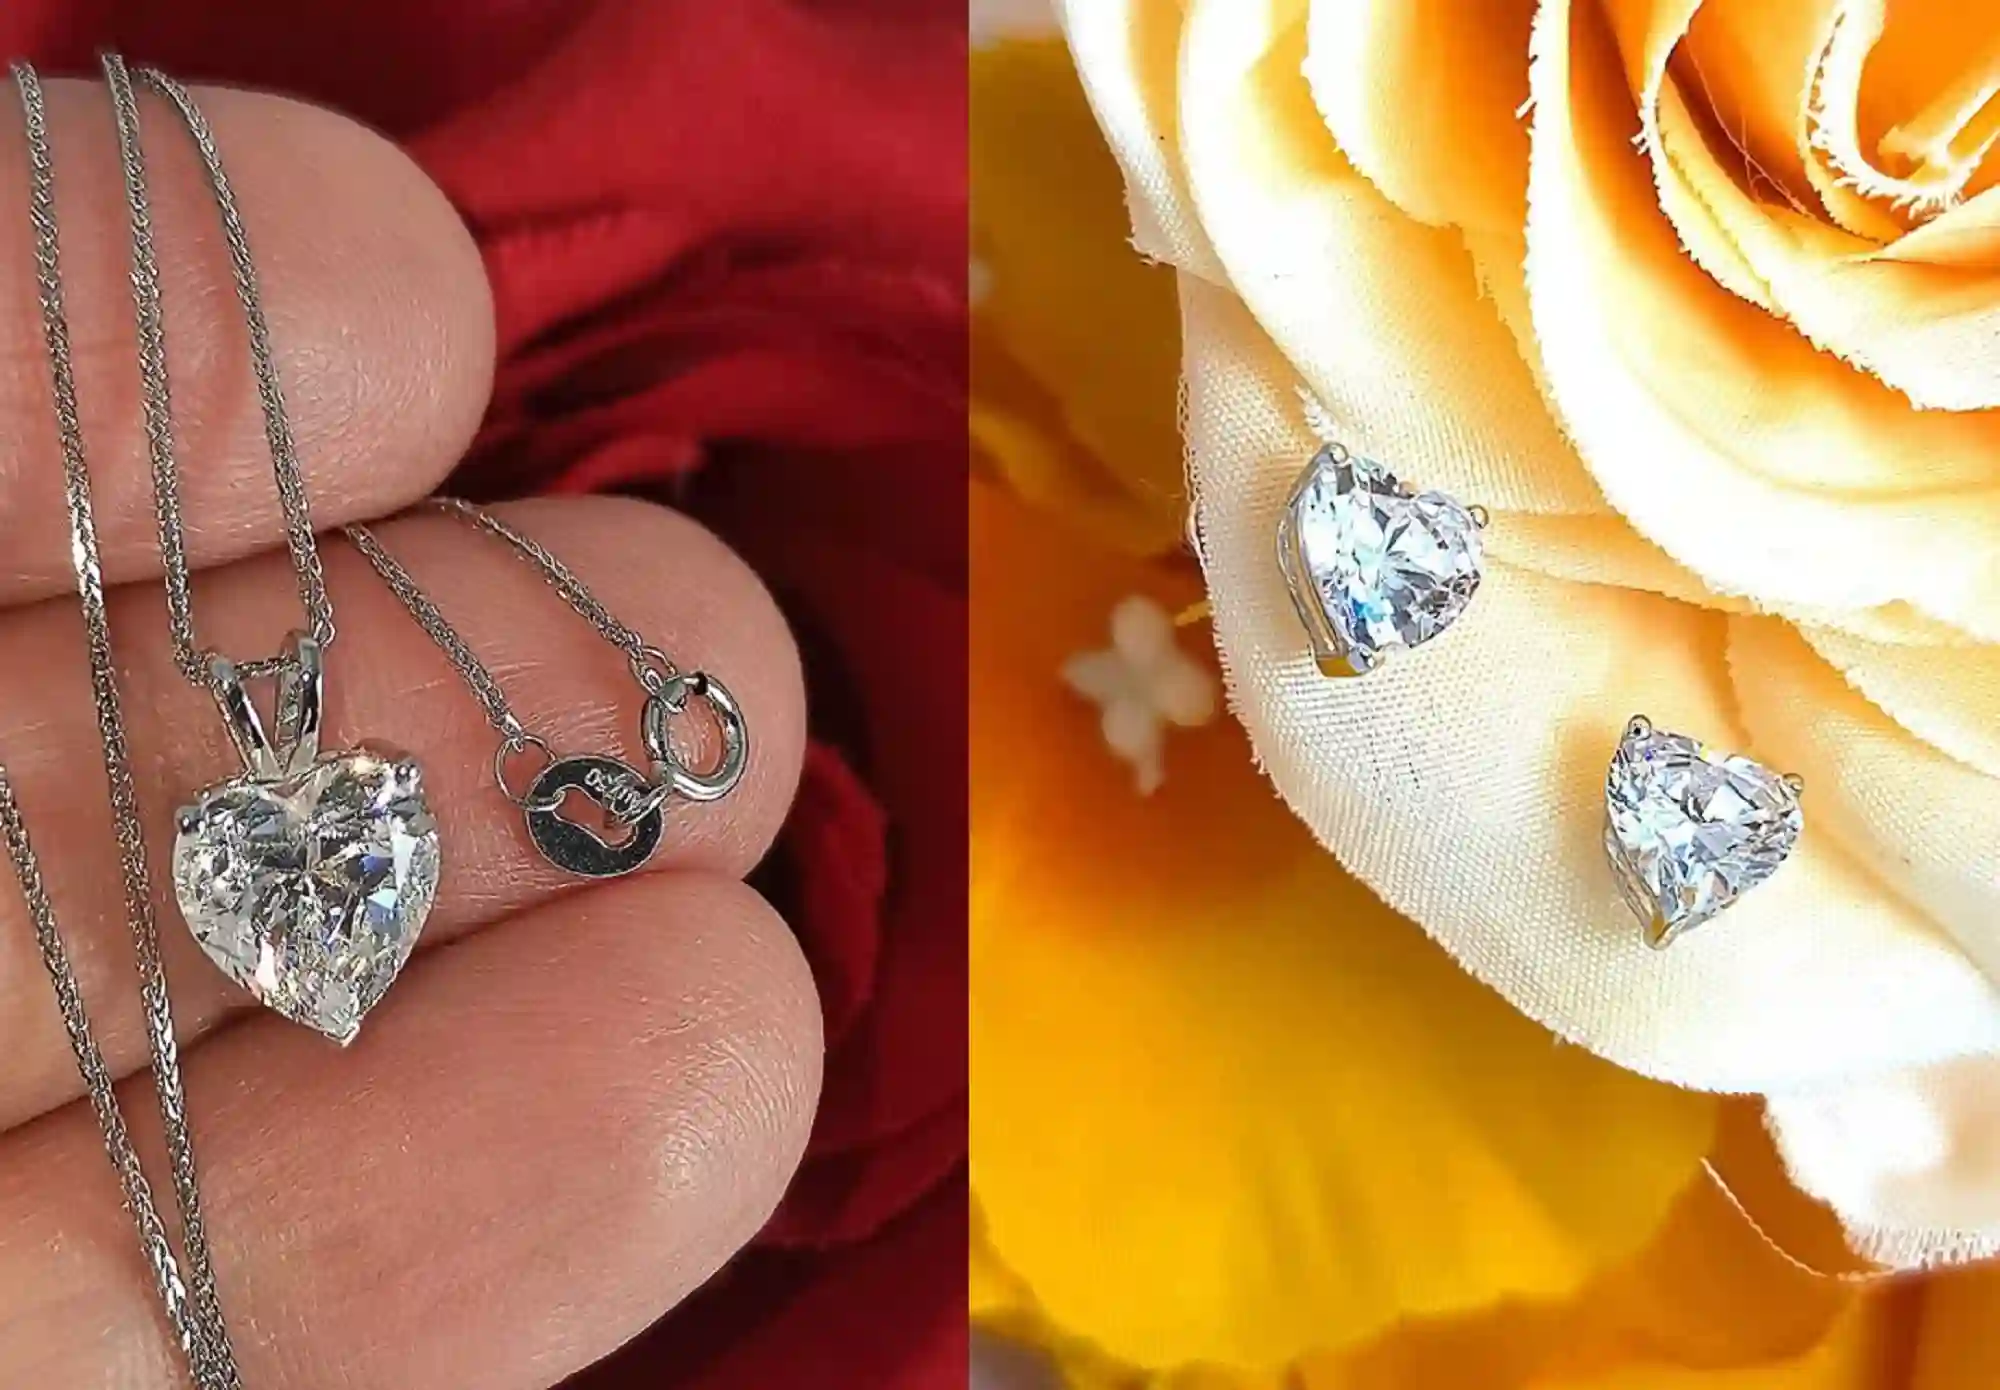 3.5ct Heart-Shape Diamond Necklace Pendant Earrings SET / Solid 18k Gold / Handmade Diamond Jewelry /Anniversary Birthday Gift Idea for her 